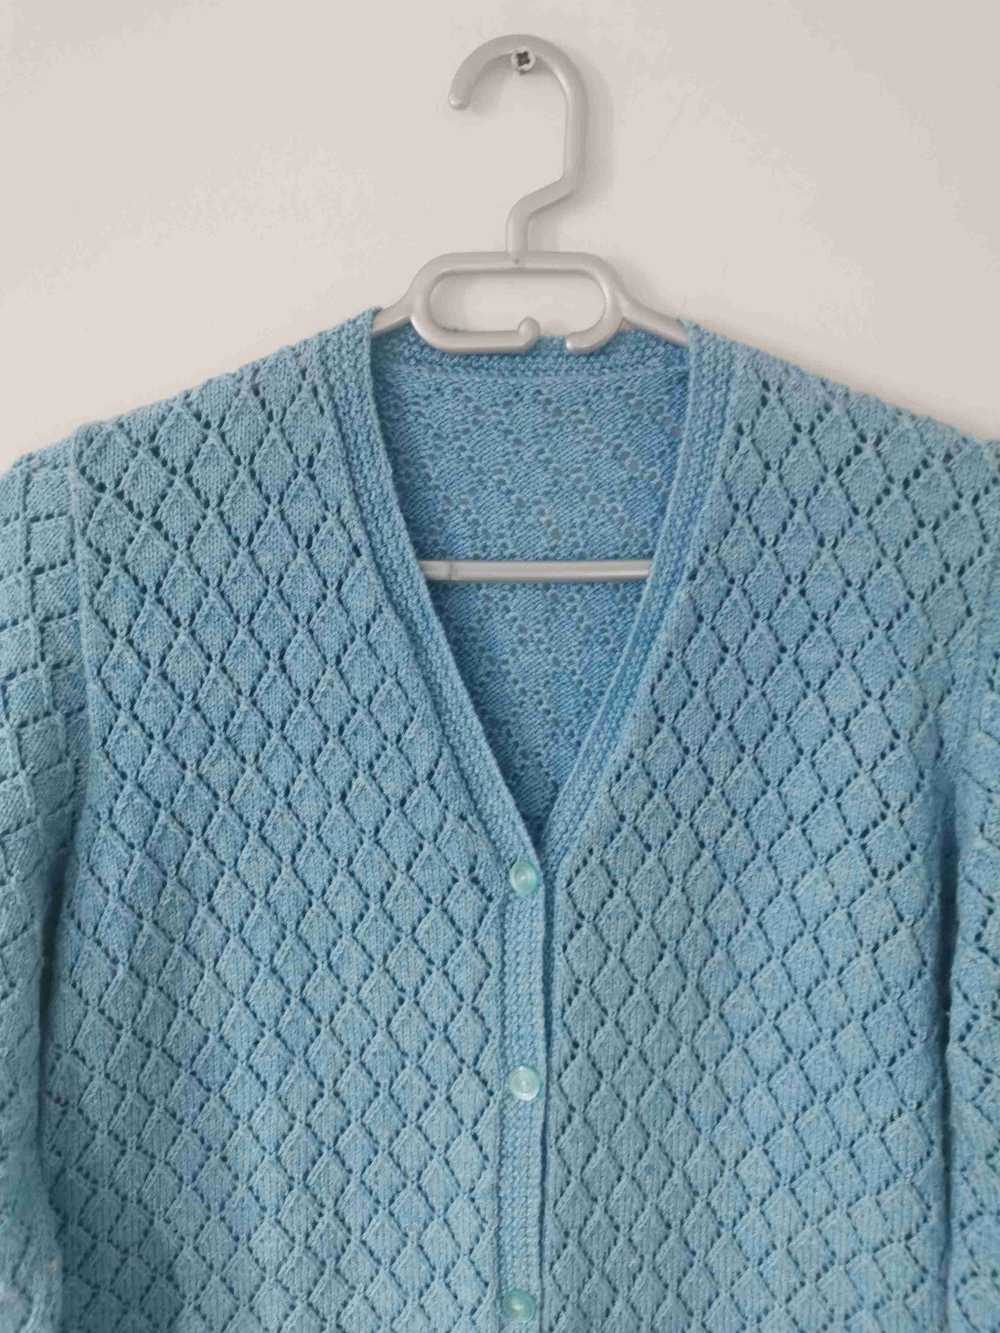 Wool cardigan - Sky blue wool cardigan, with open… - image 2